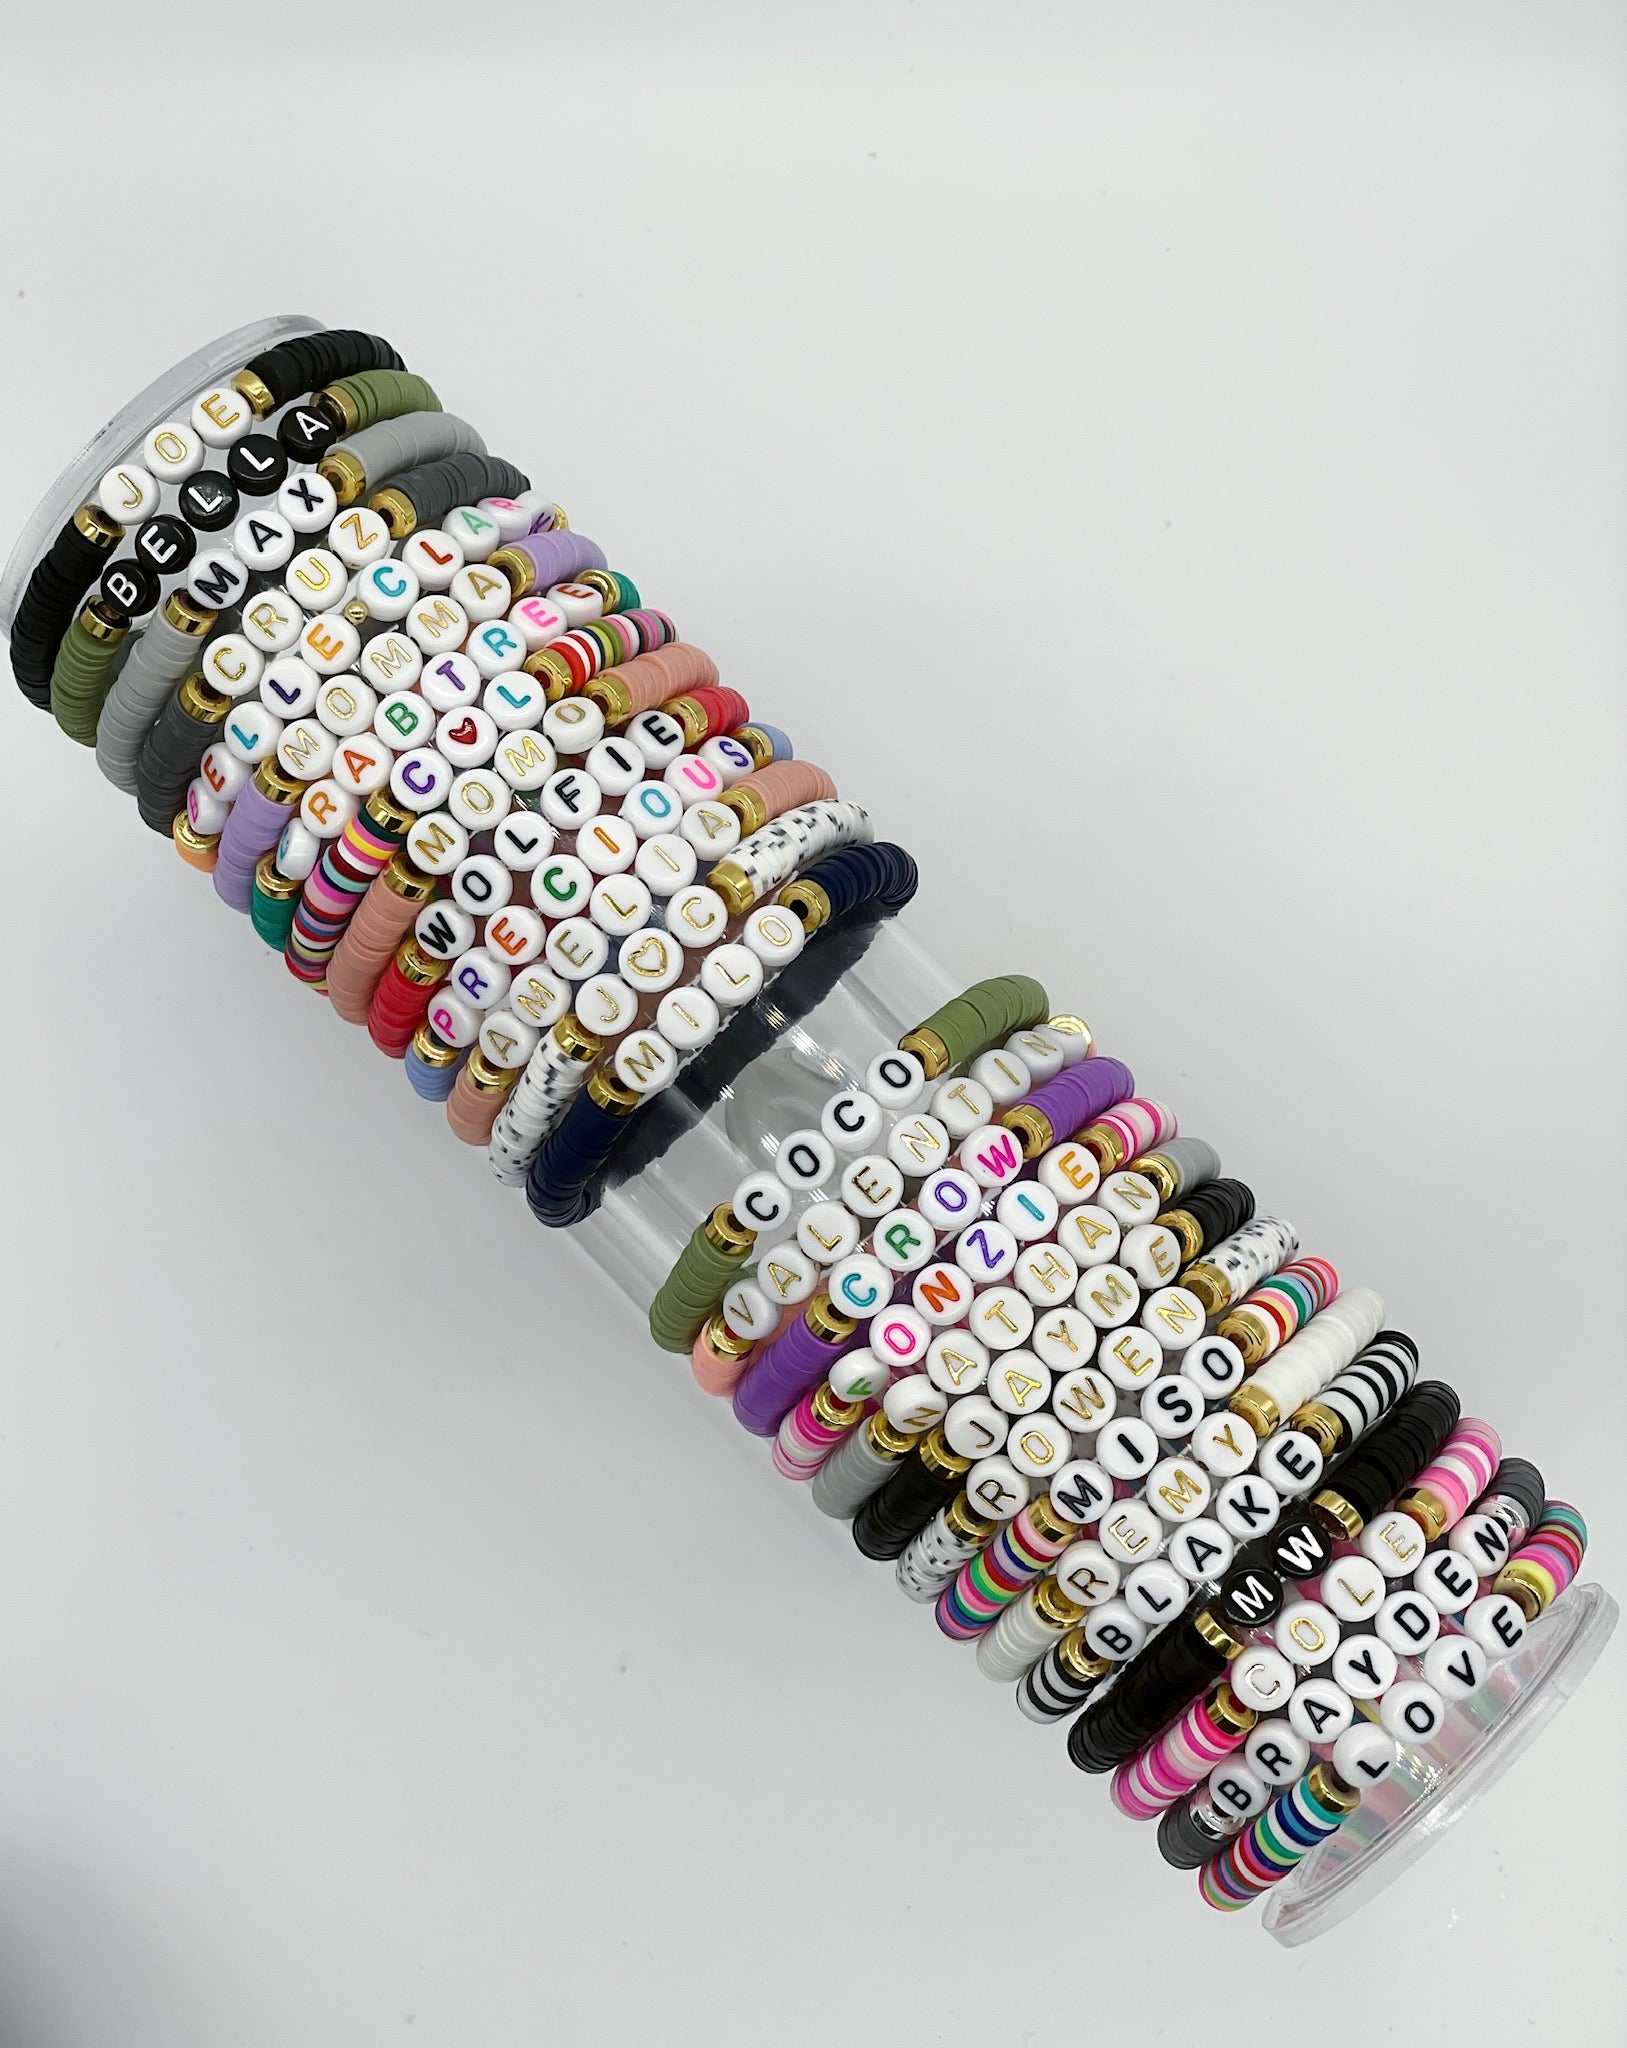 Cute Beaded Bracelets Words, Crystal Beads Letter Bracelet